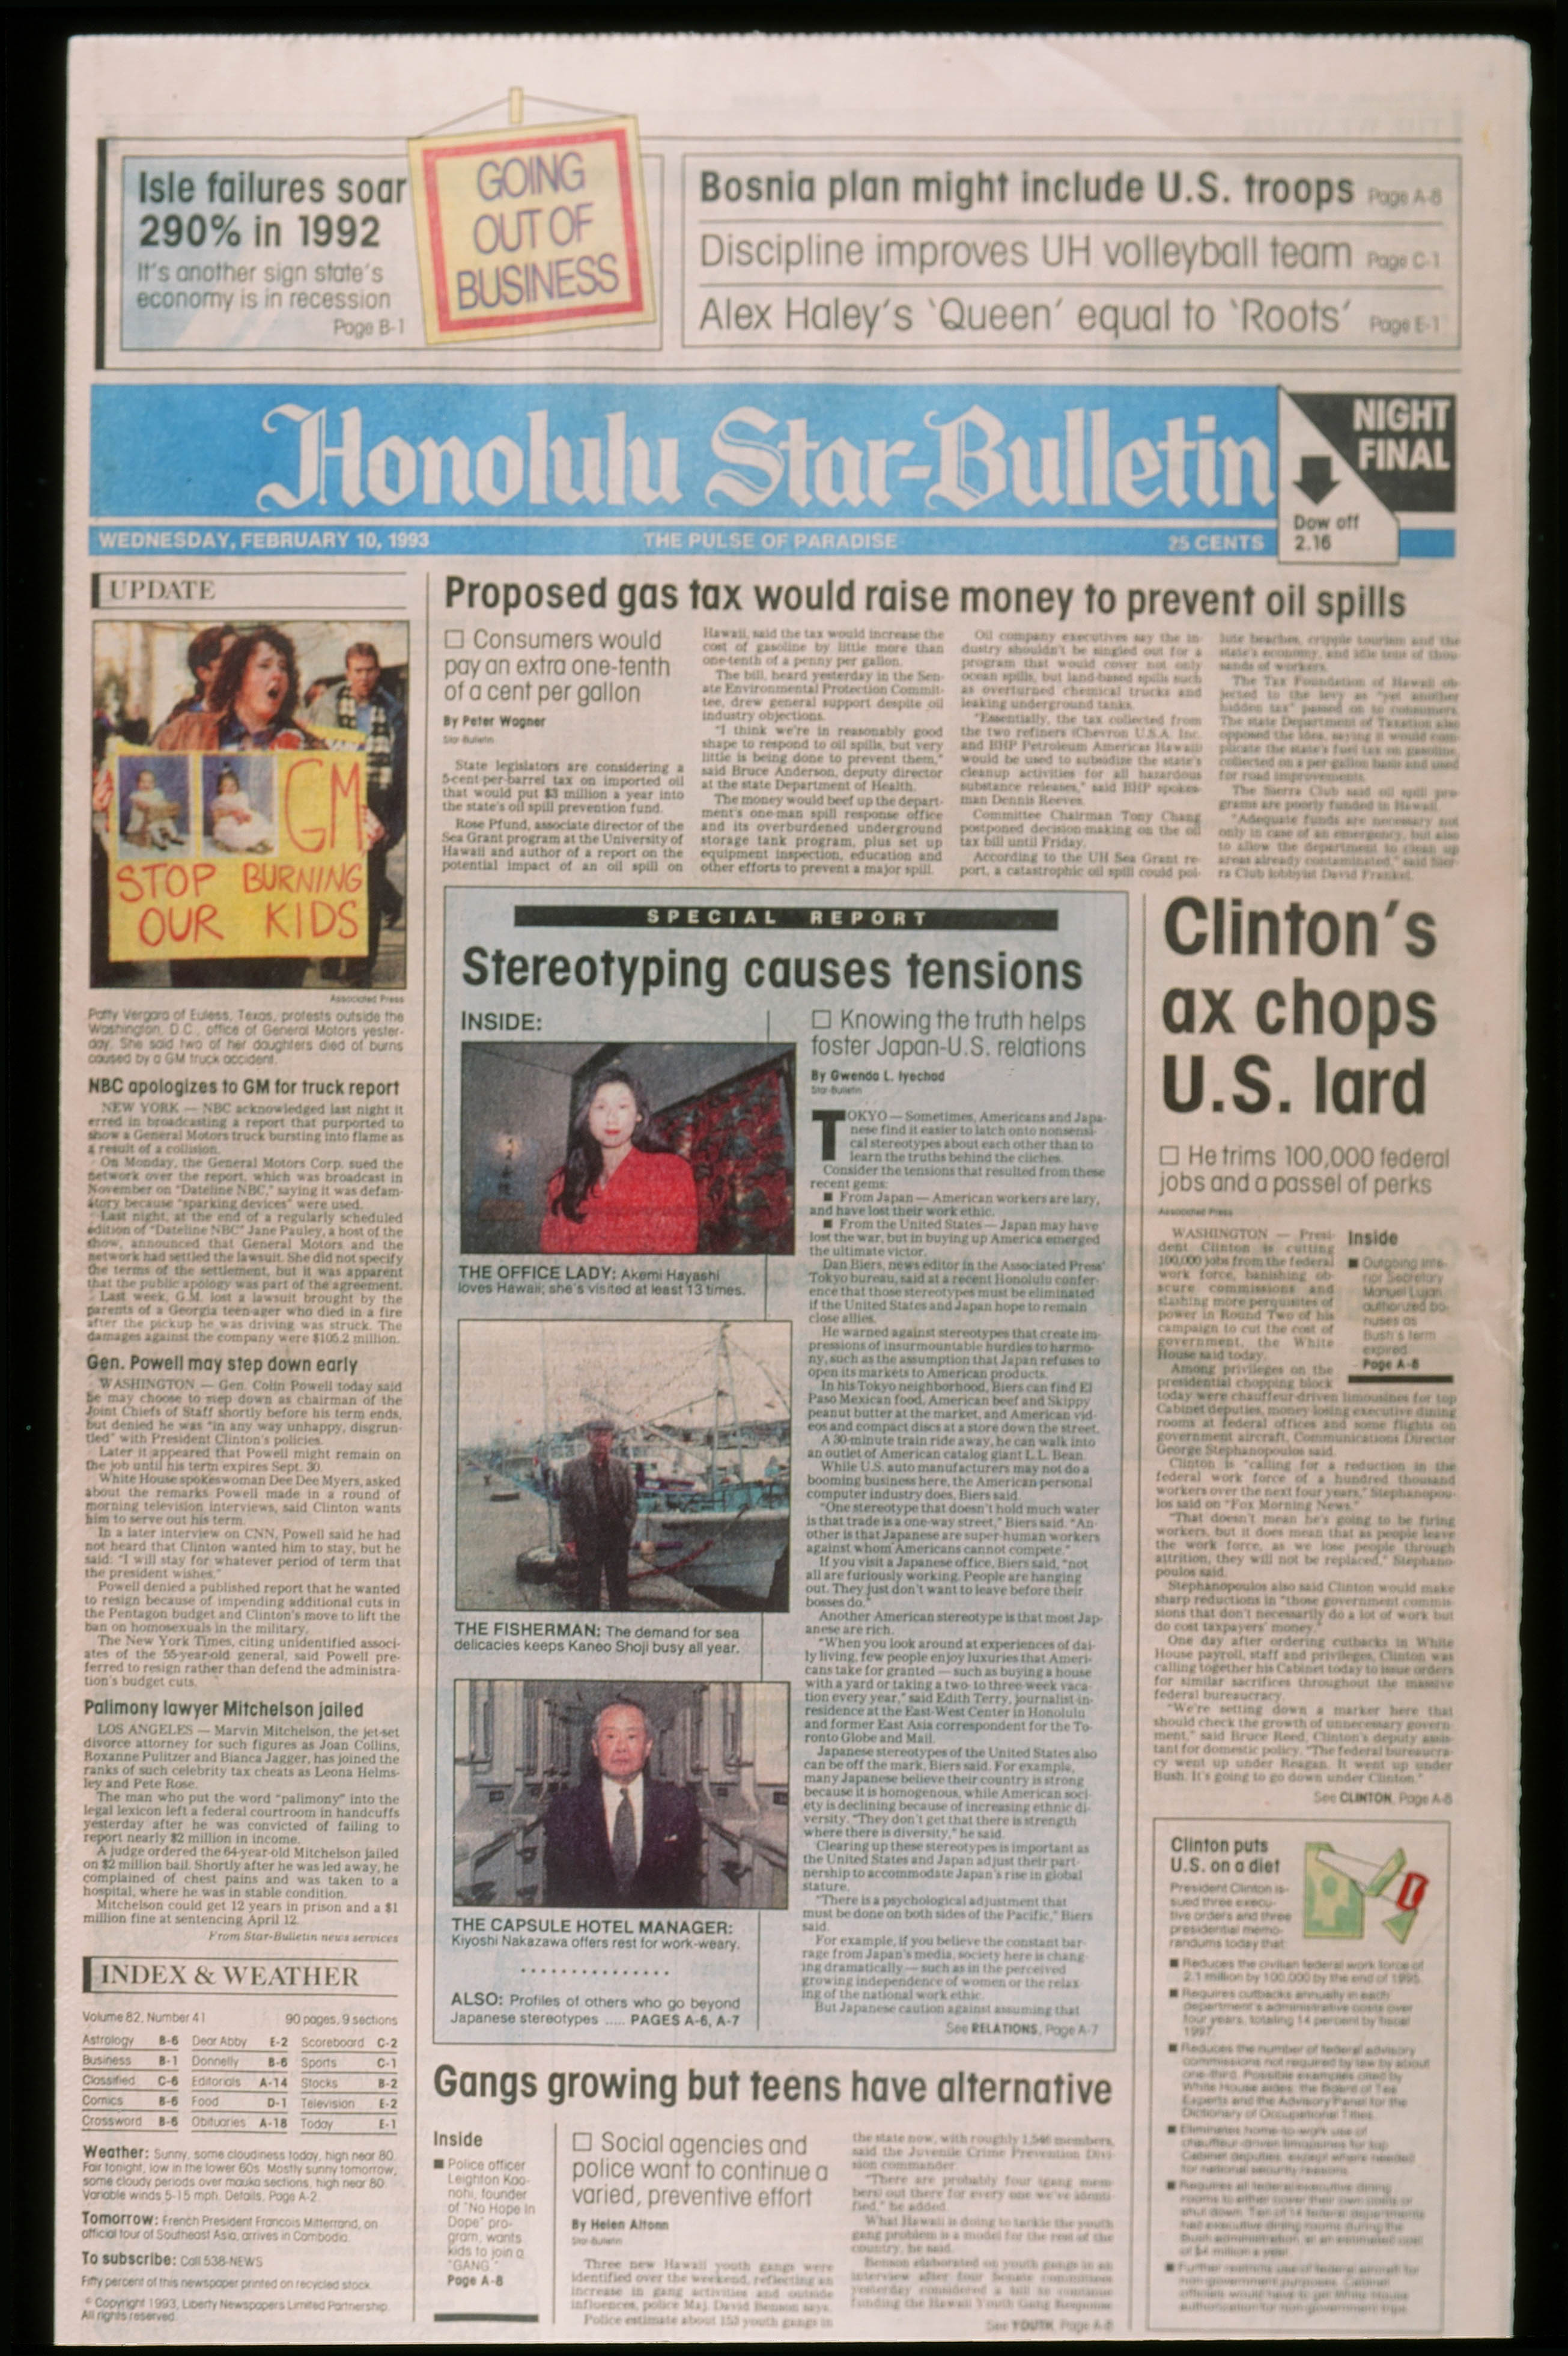 Honolulu Star-Bulletin Sports